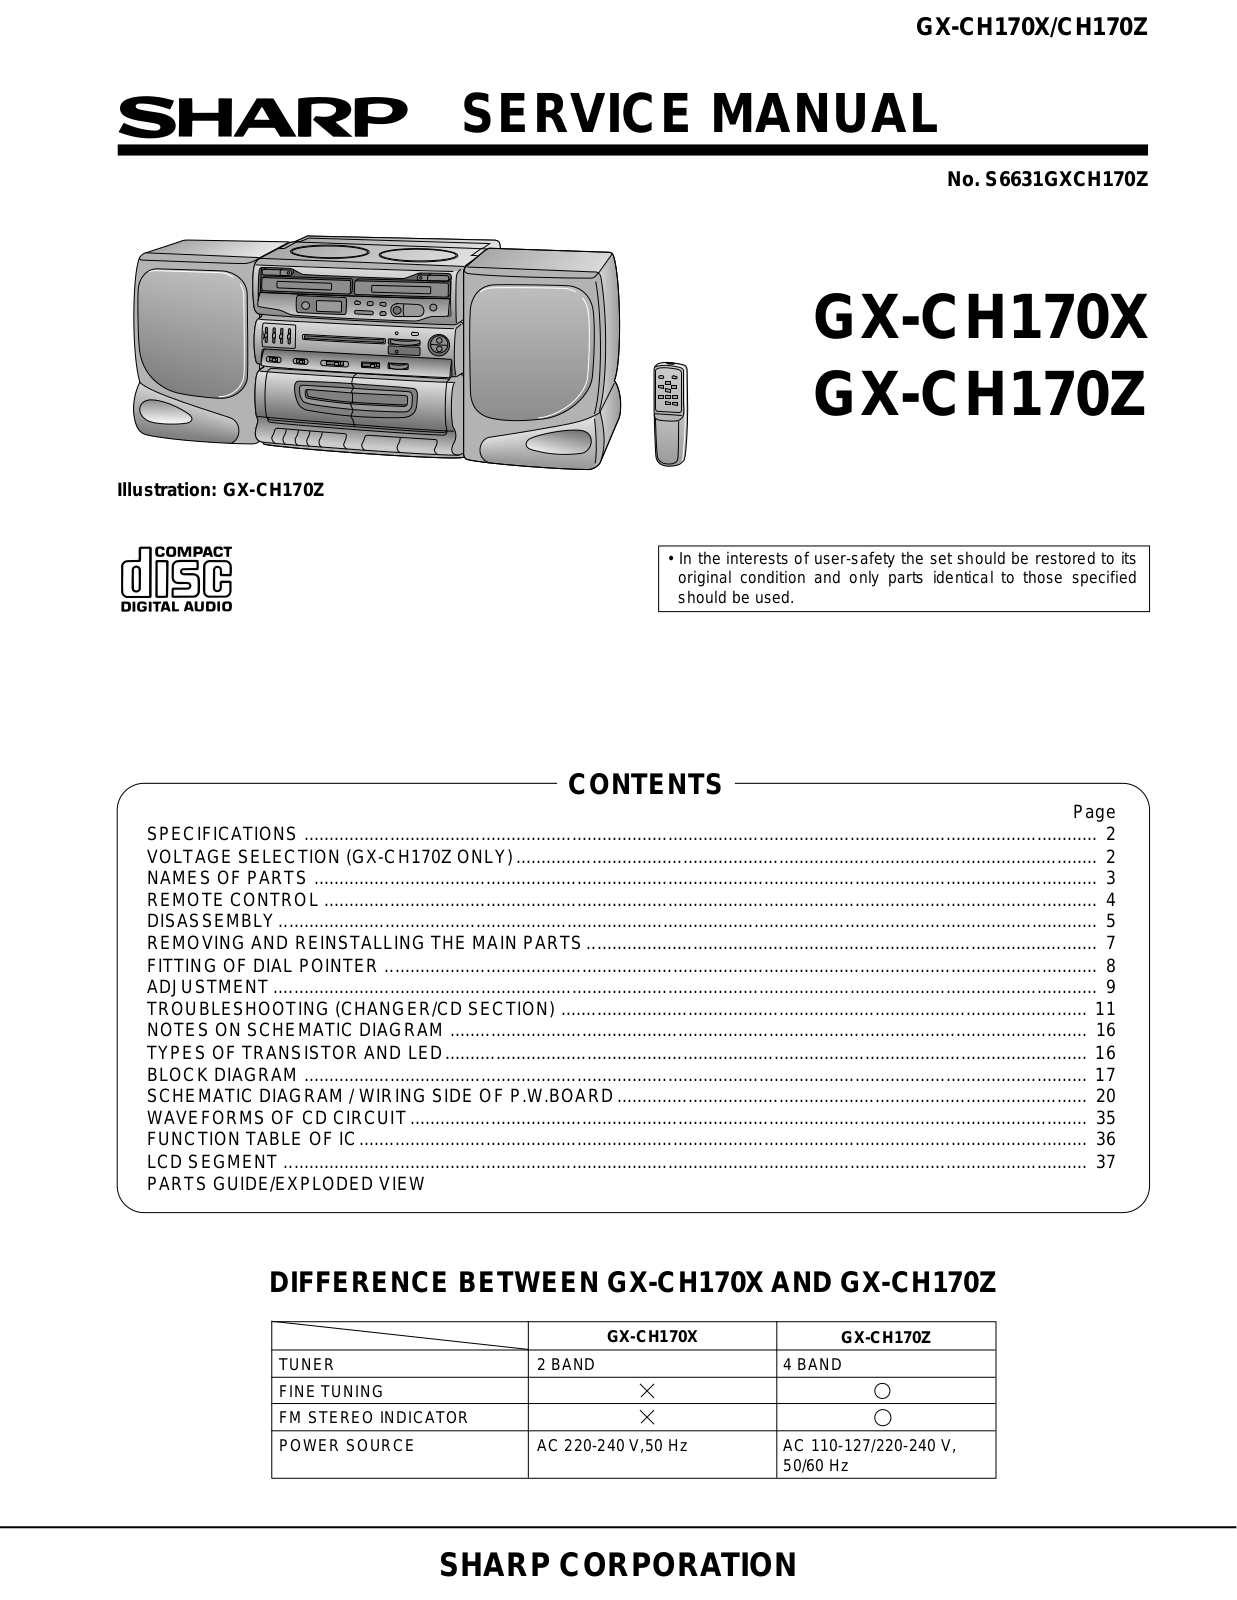 Sharp GXCH-170-X, GXCH-170-Z Service manual